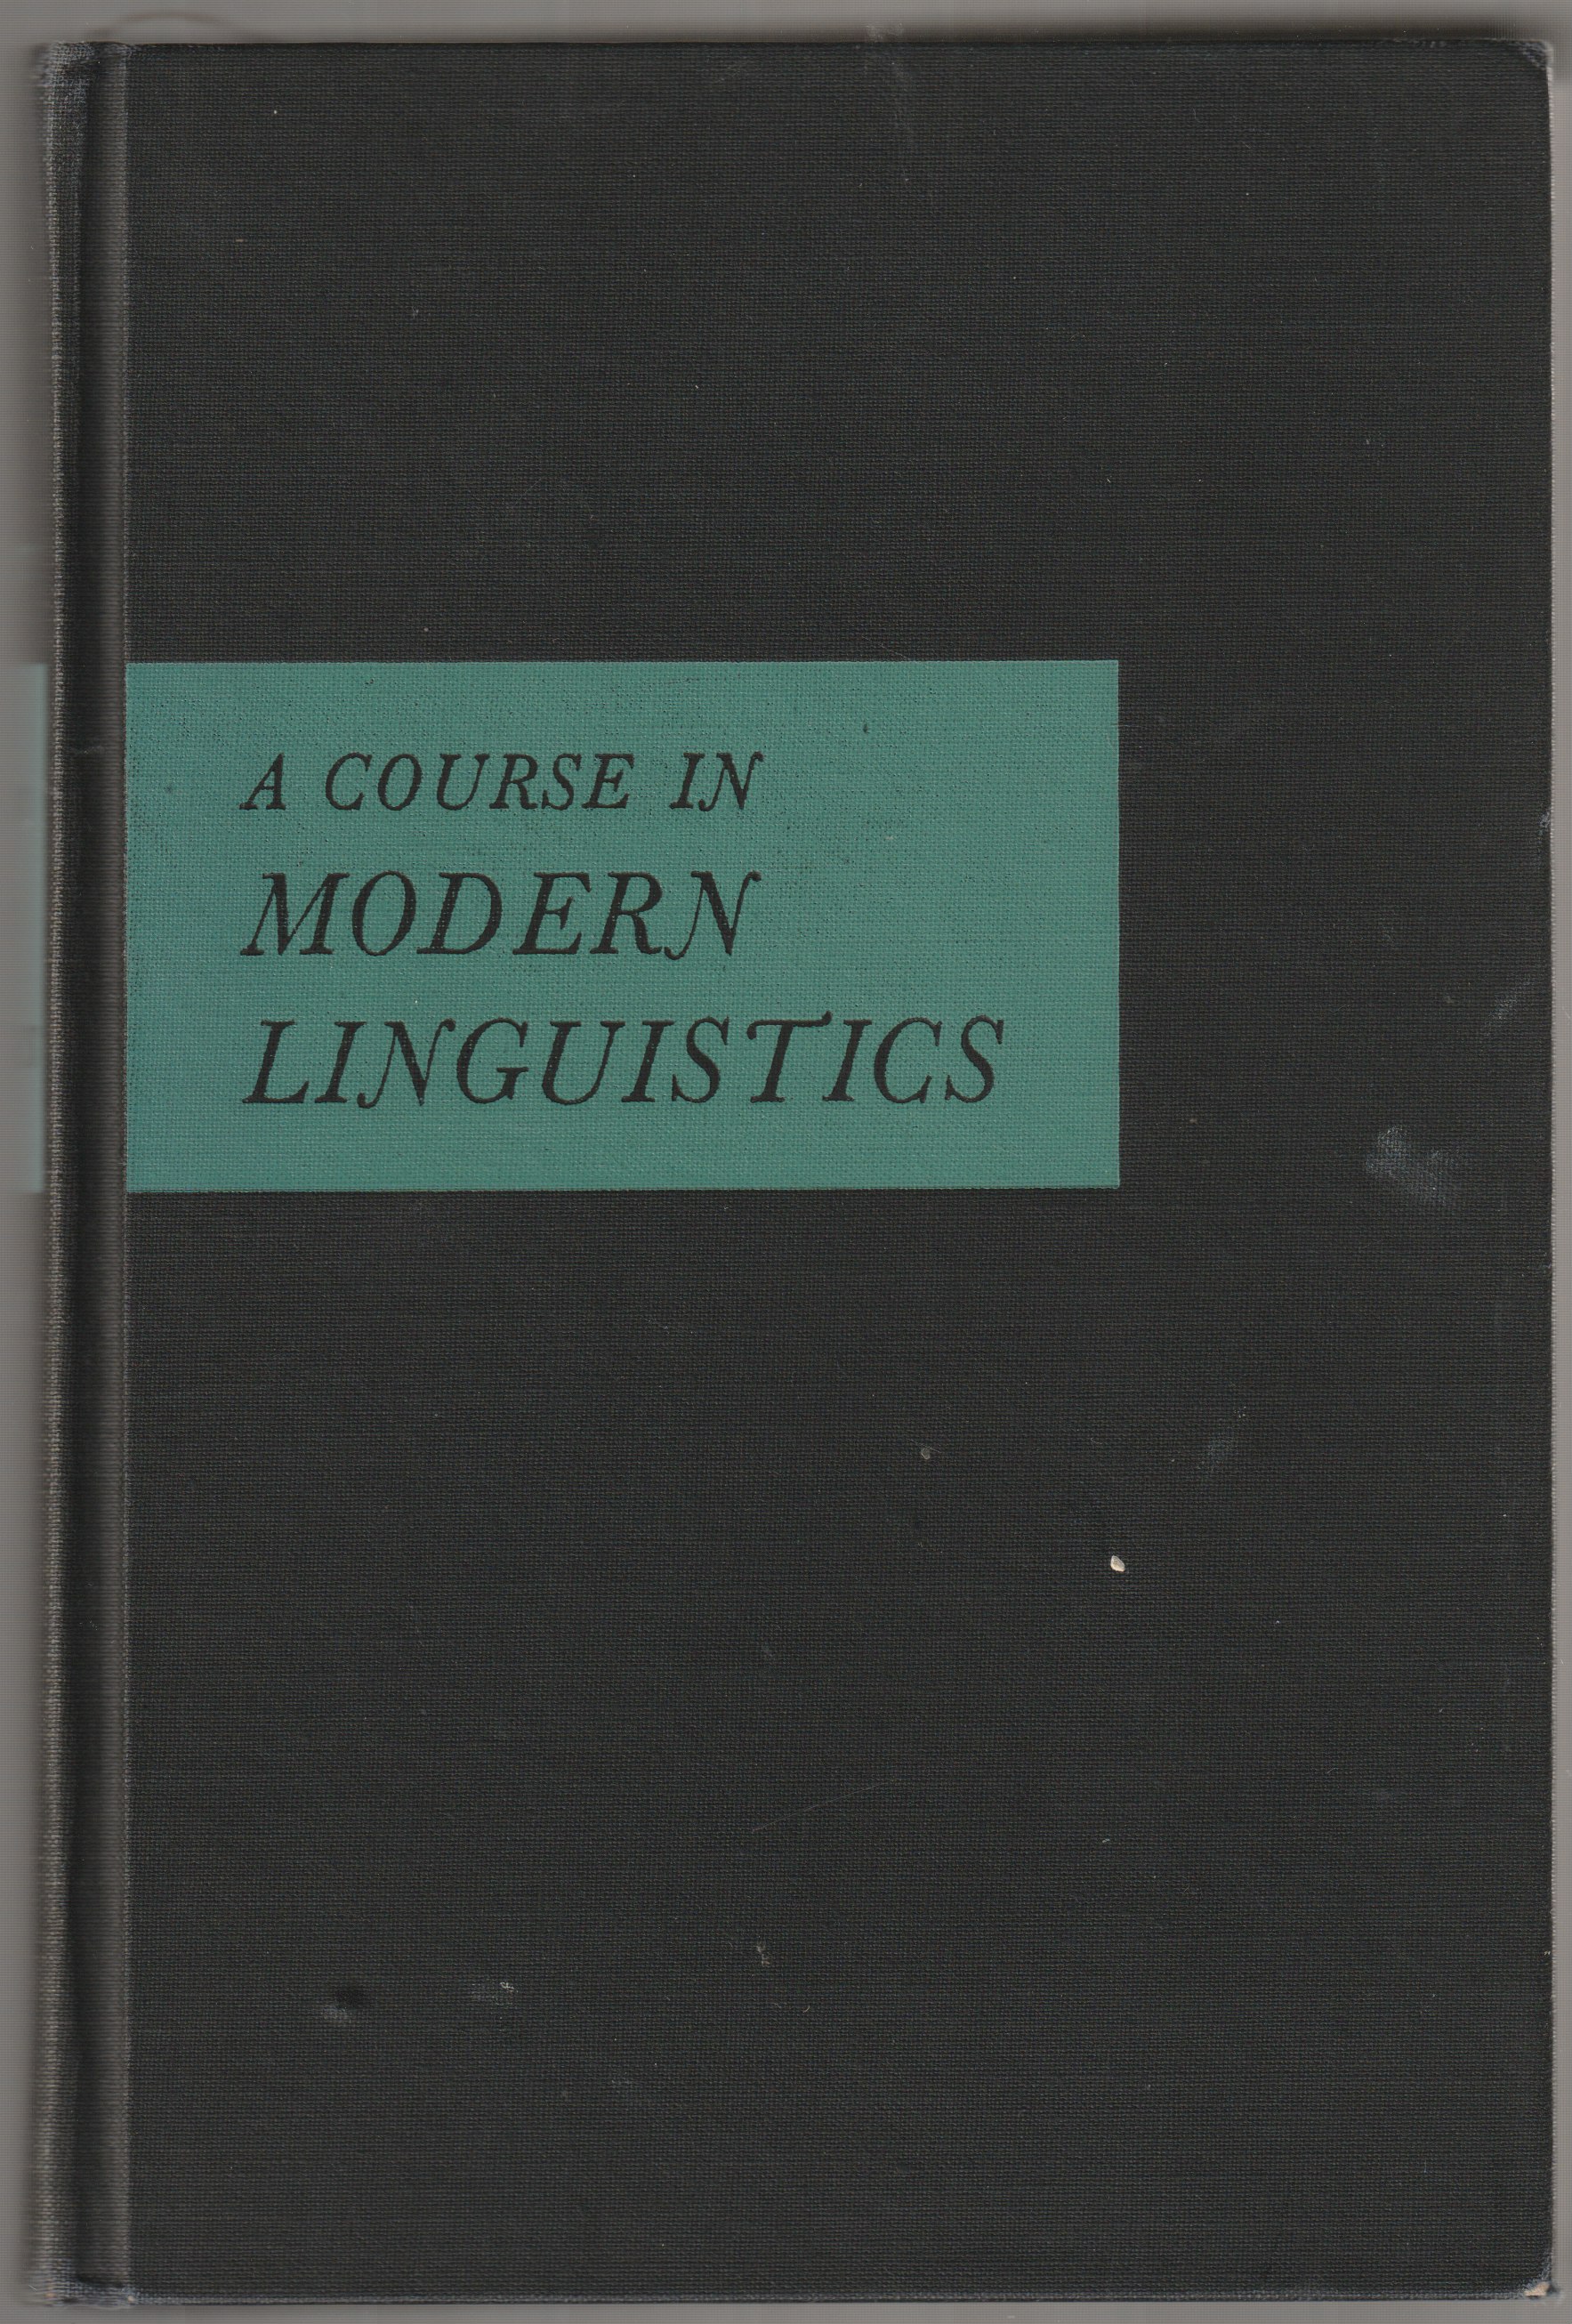 A course in modern linguistics.